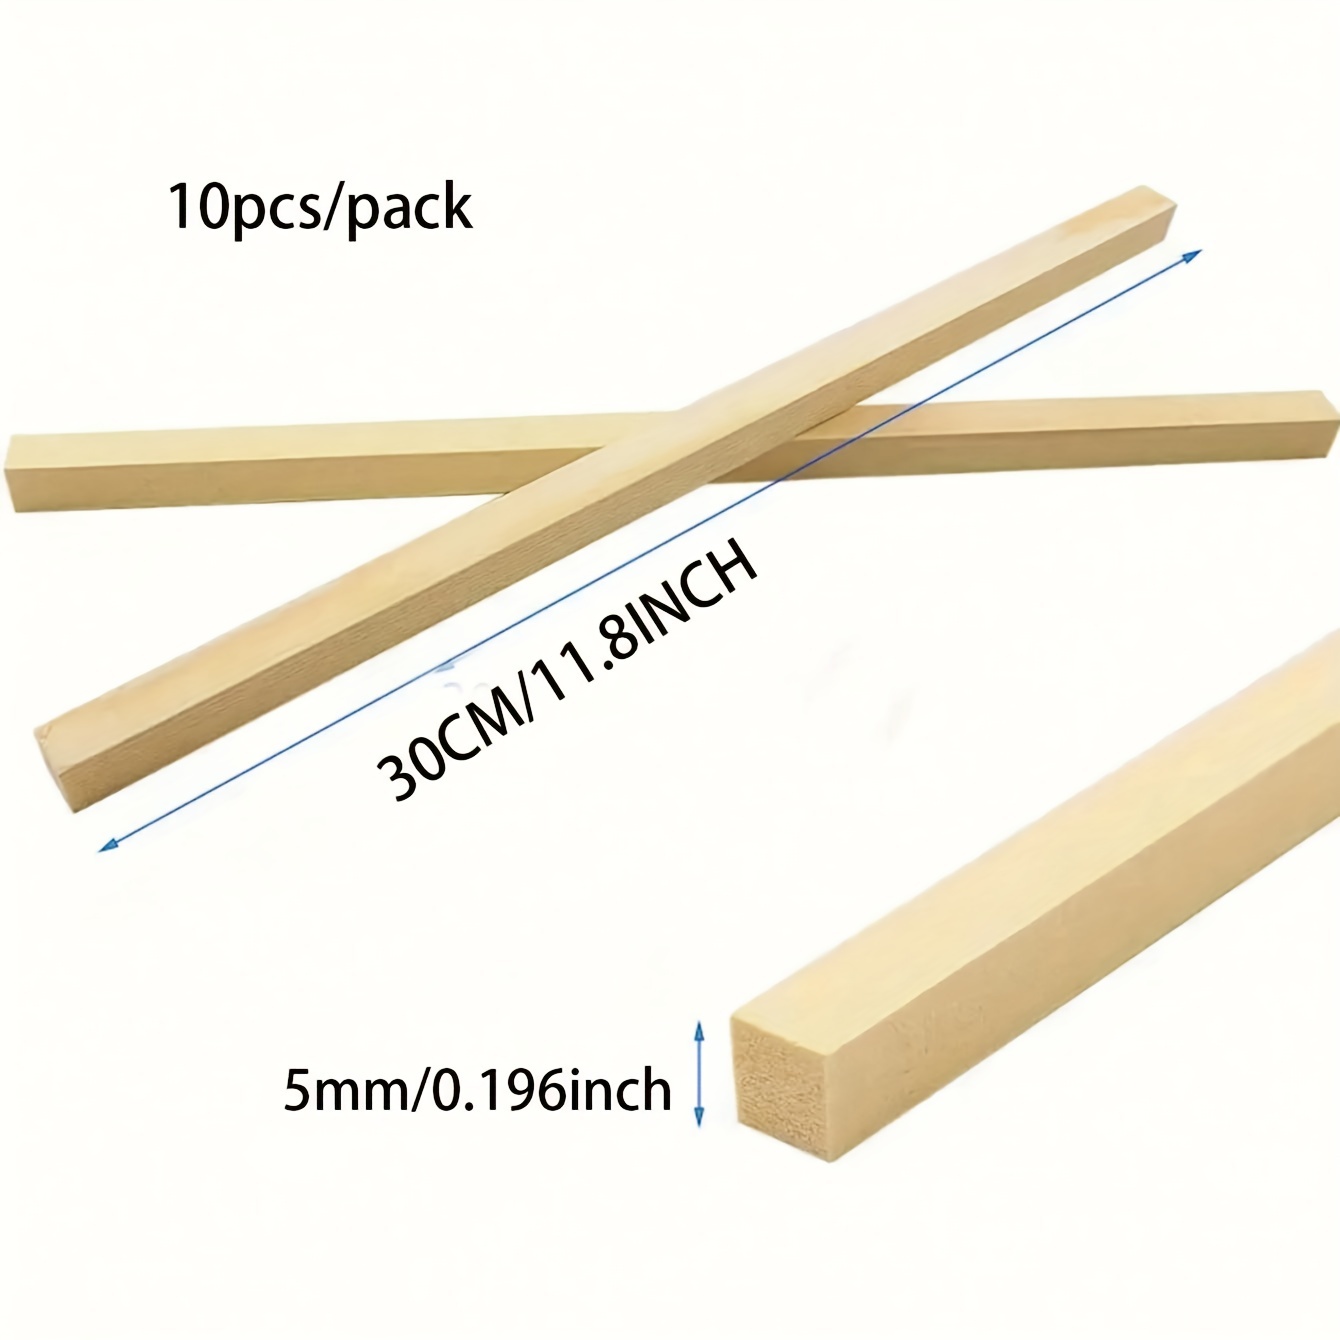 100Pcs Unpainted Wooden Dowel Rods Sticks- Hardwood Dowels - Craft Dowels  for Woodworking - for Model Building Games Kids Crafts Home Decor - 20cm 